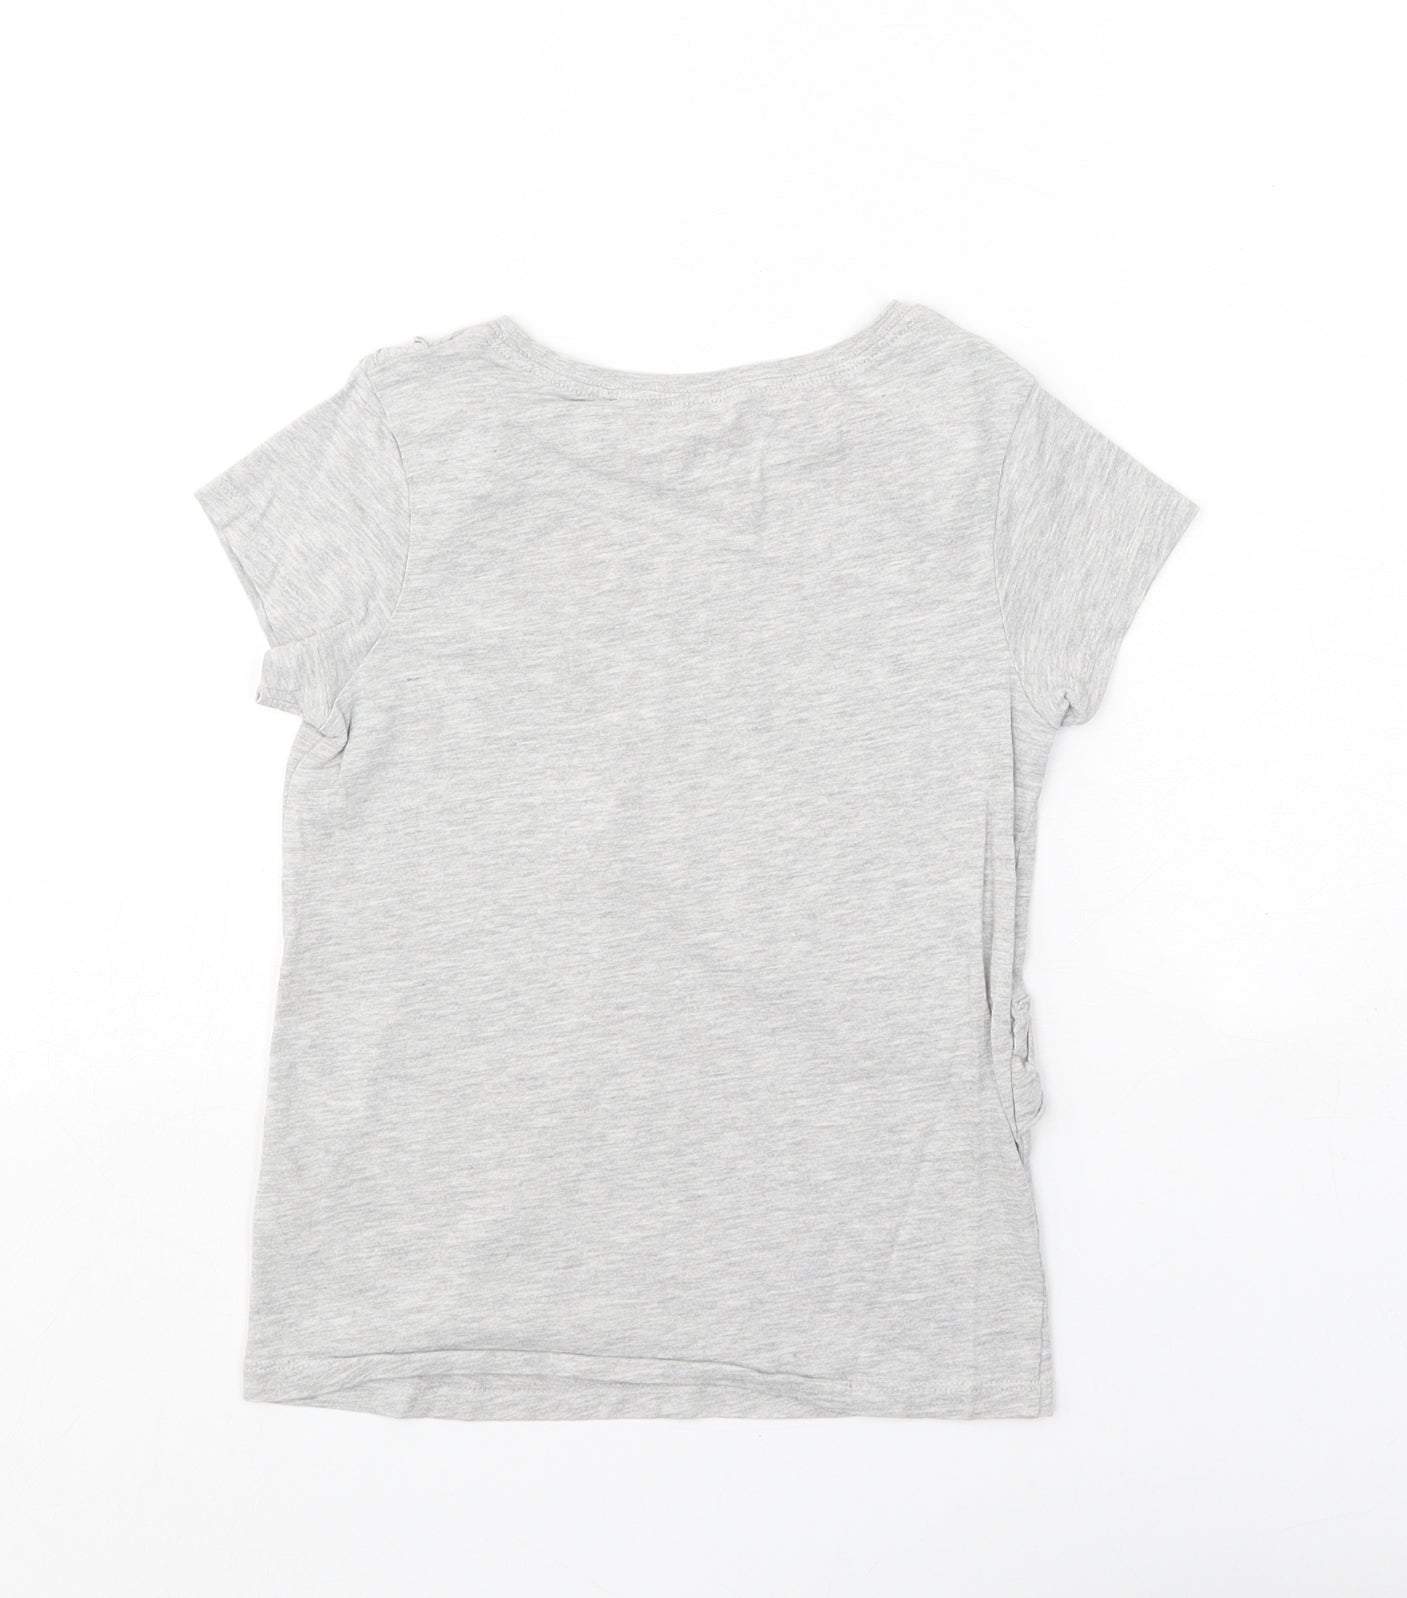 NEXT Girls Grey Cotton Basic T-Shirt Size 8 Years Round Neck Pullover